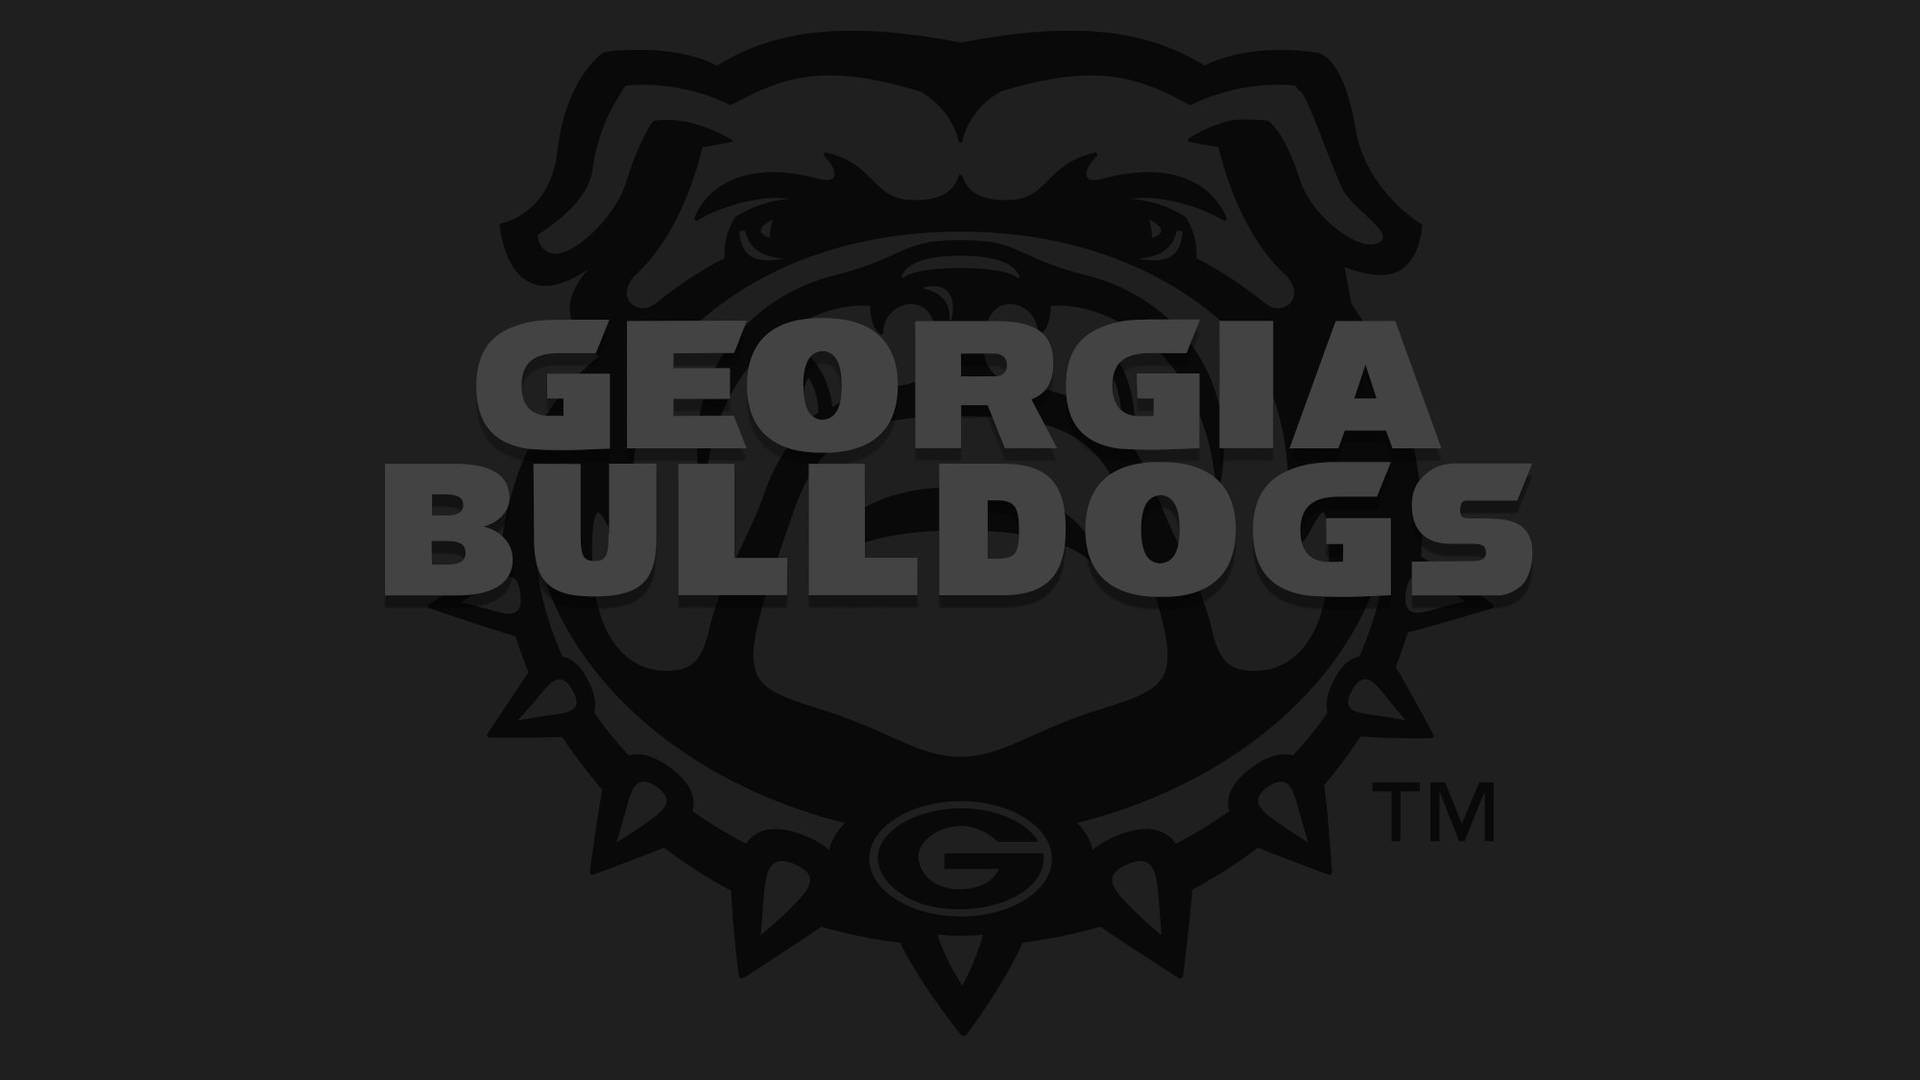 Svartageorgia Bulldogs. Wallpaper